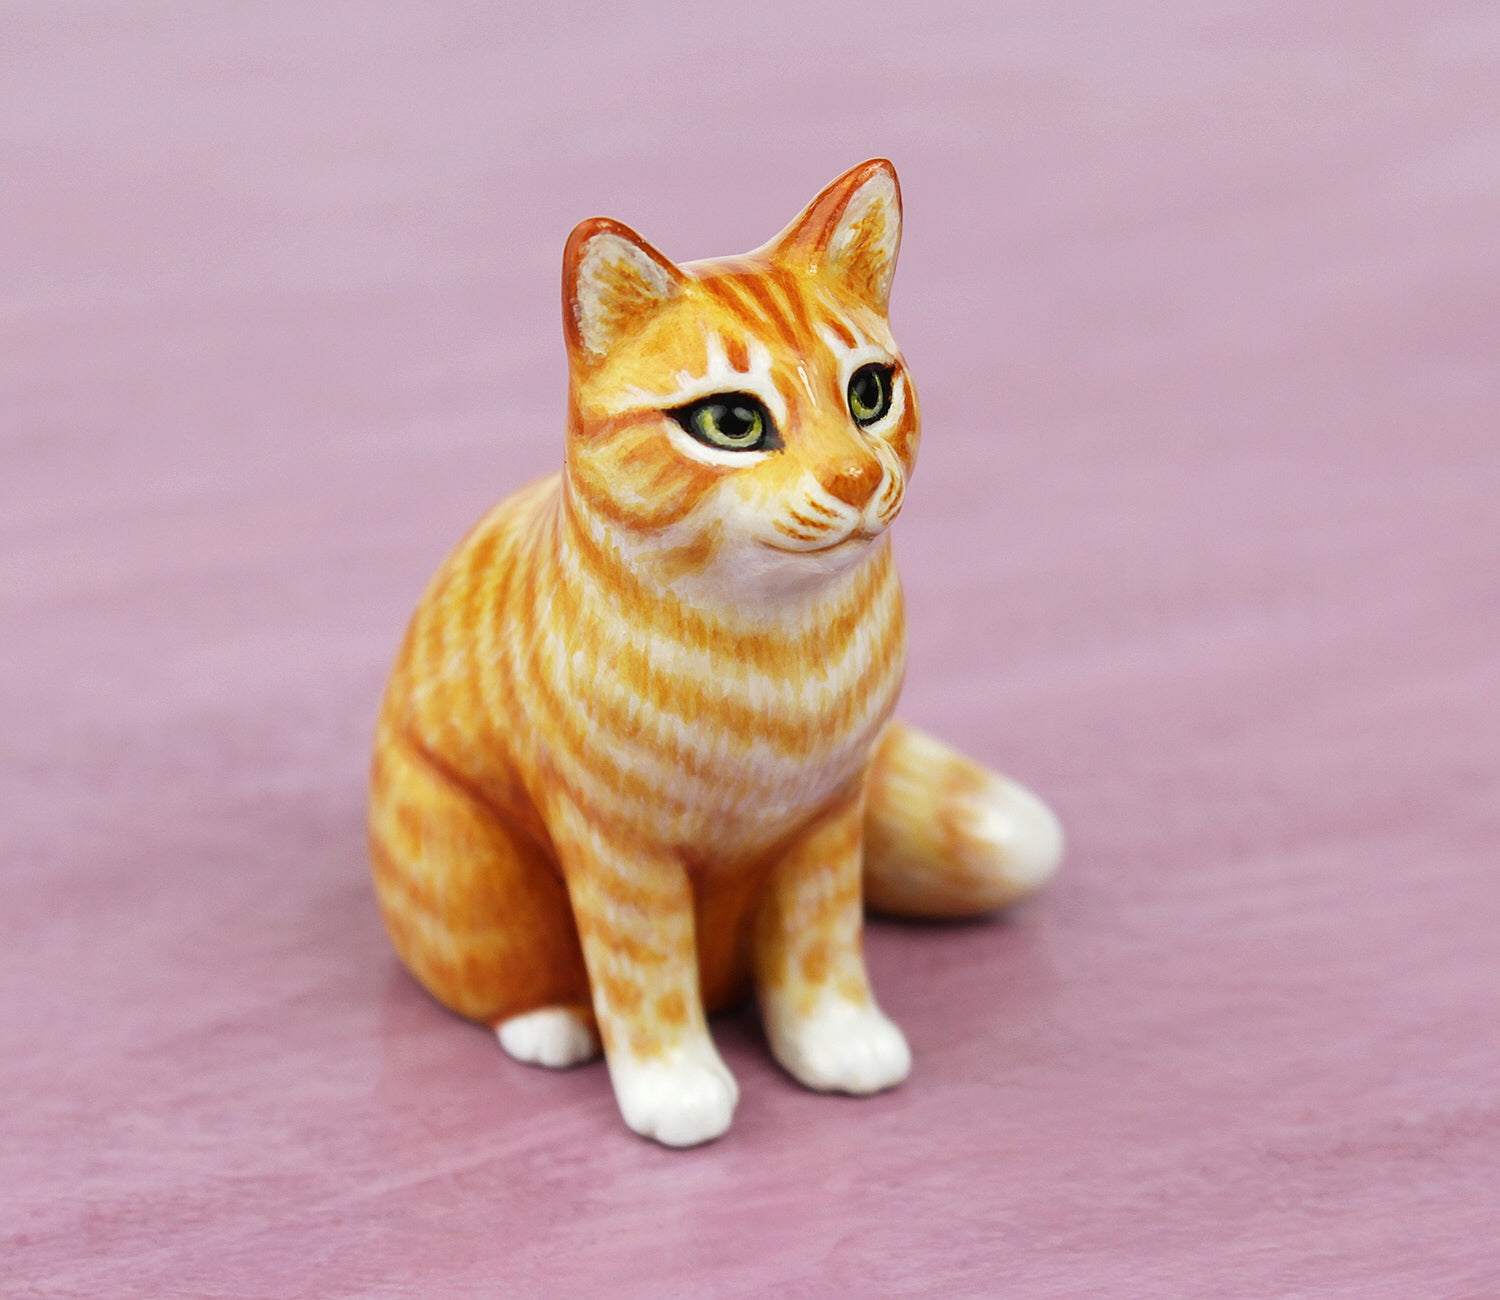 Orange tabby cat